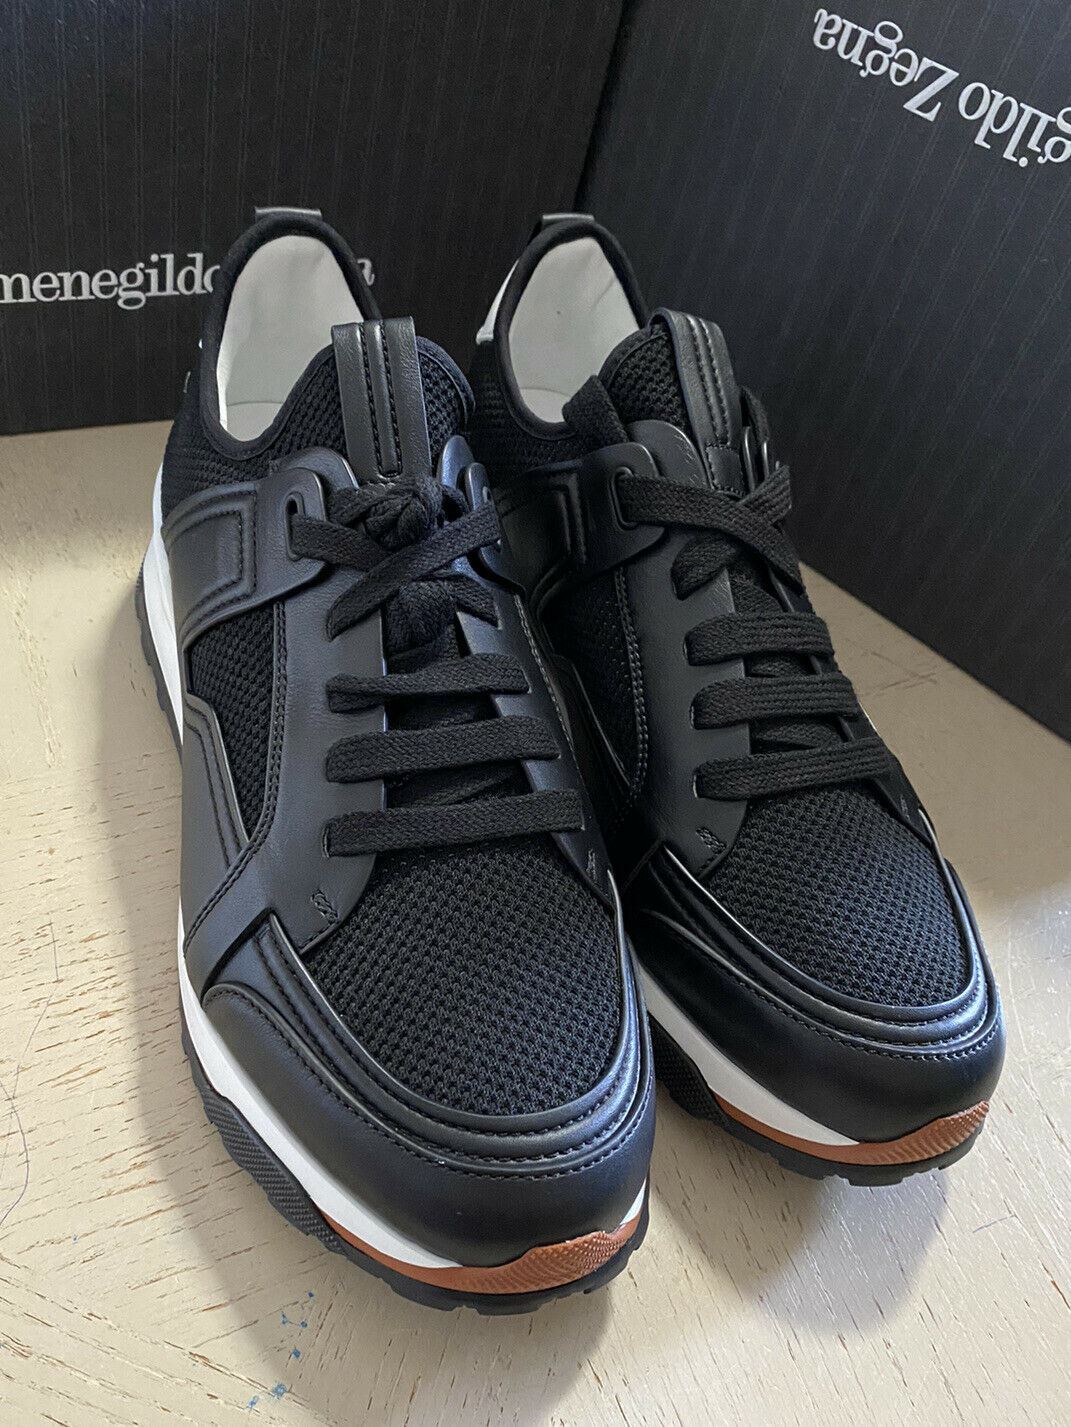 New $775 Ermenegildo Zegna Leather Sneakers Shoes Black 11 US Italy